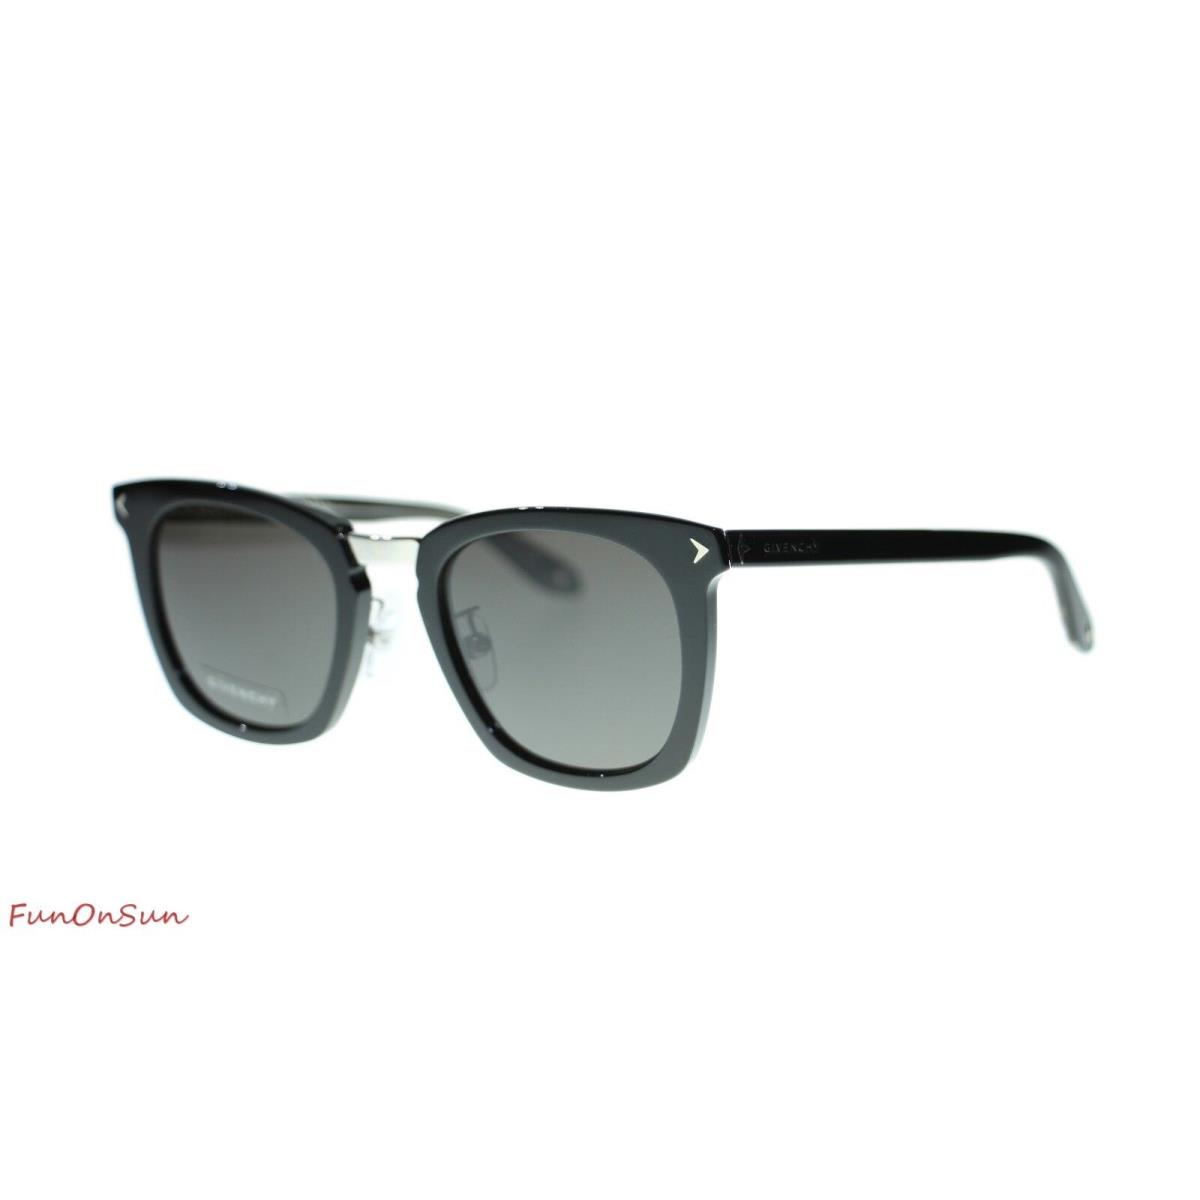 Givenchy Women`s Sunglasses GV7065 807 Black/grey Lens Square